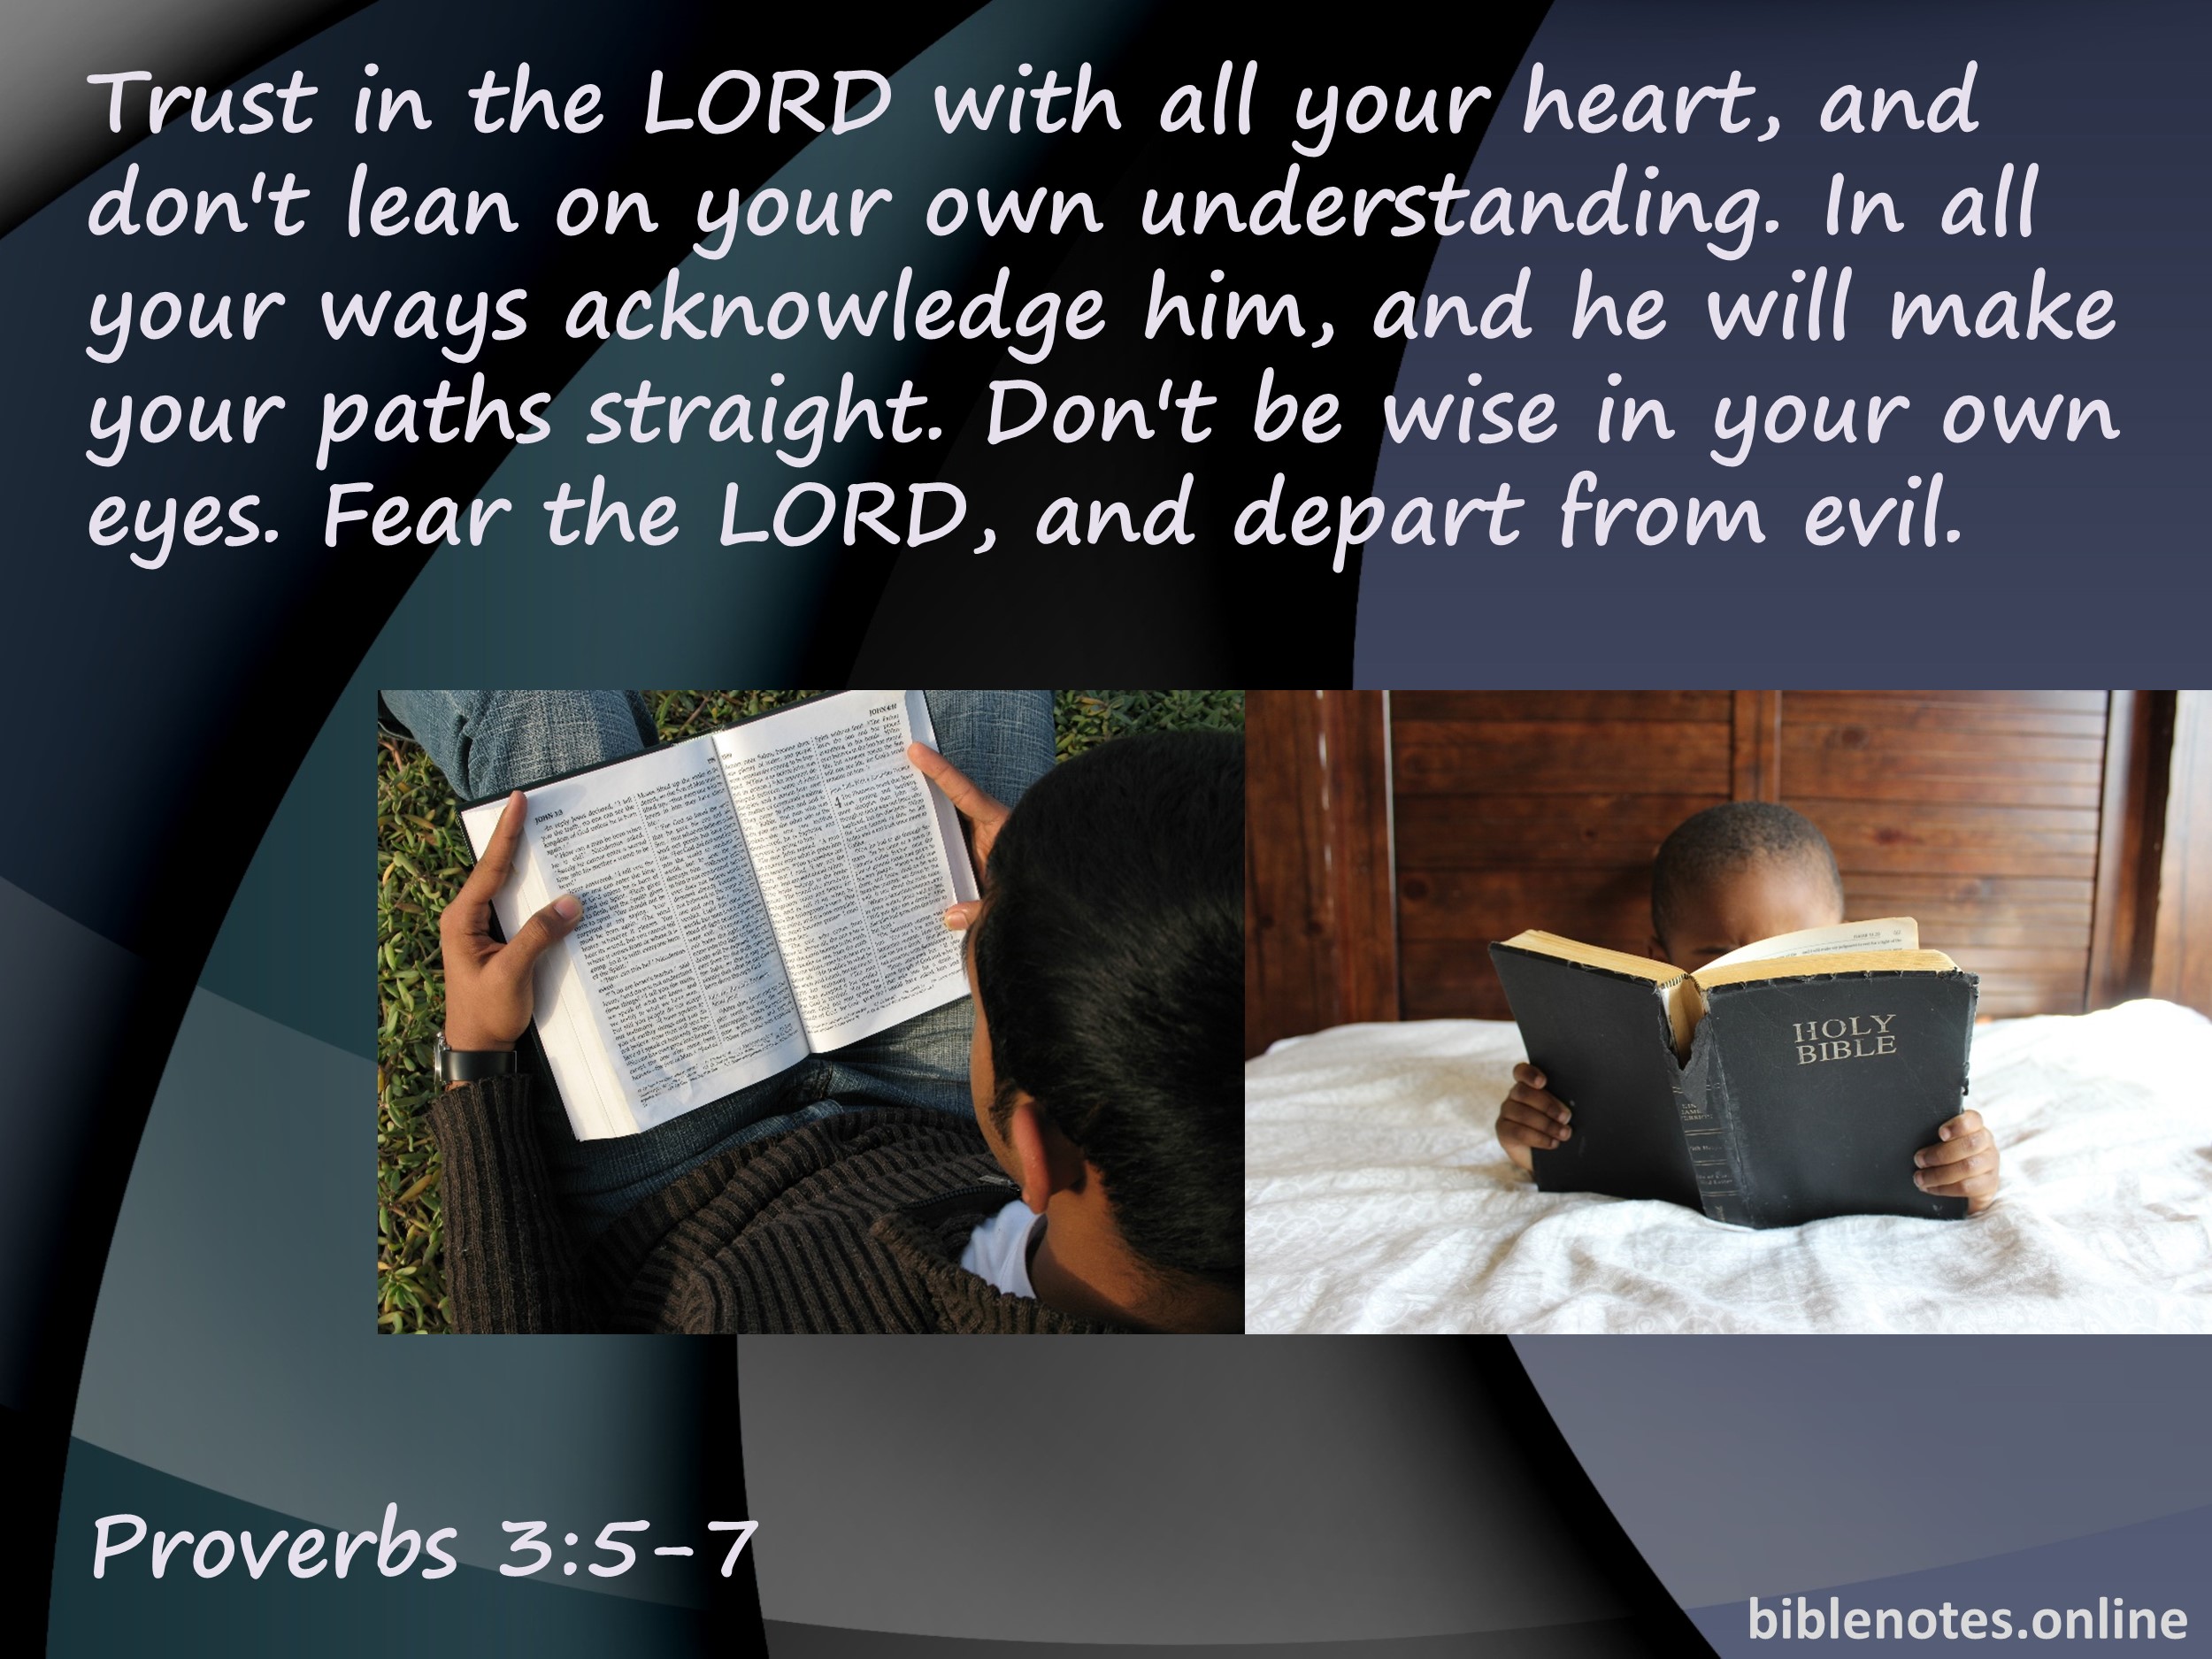 Favourite Bible Verse: Proverbs 3:5-7